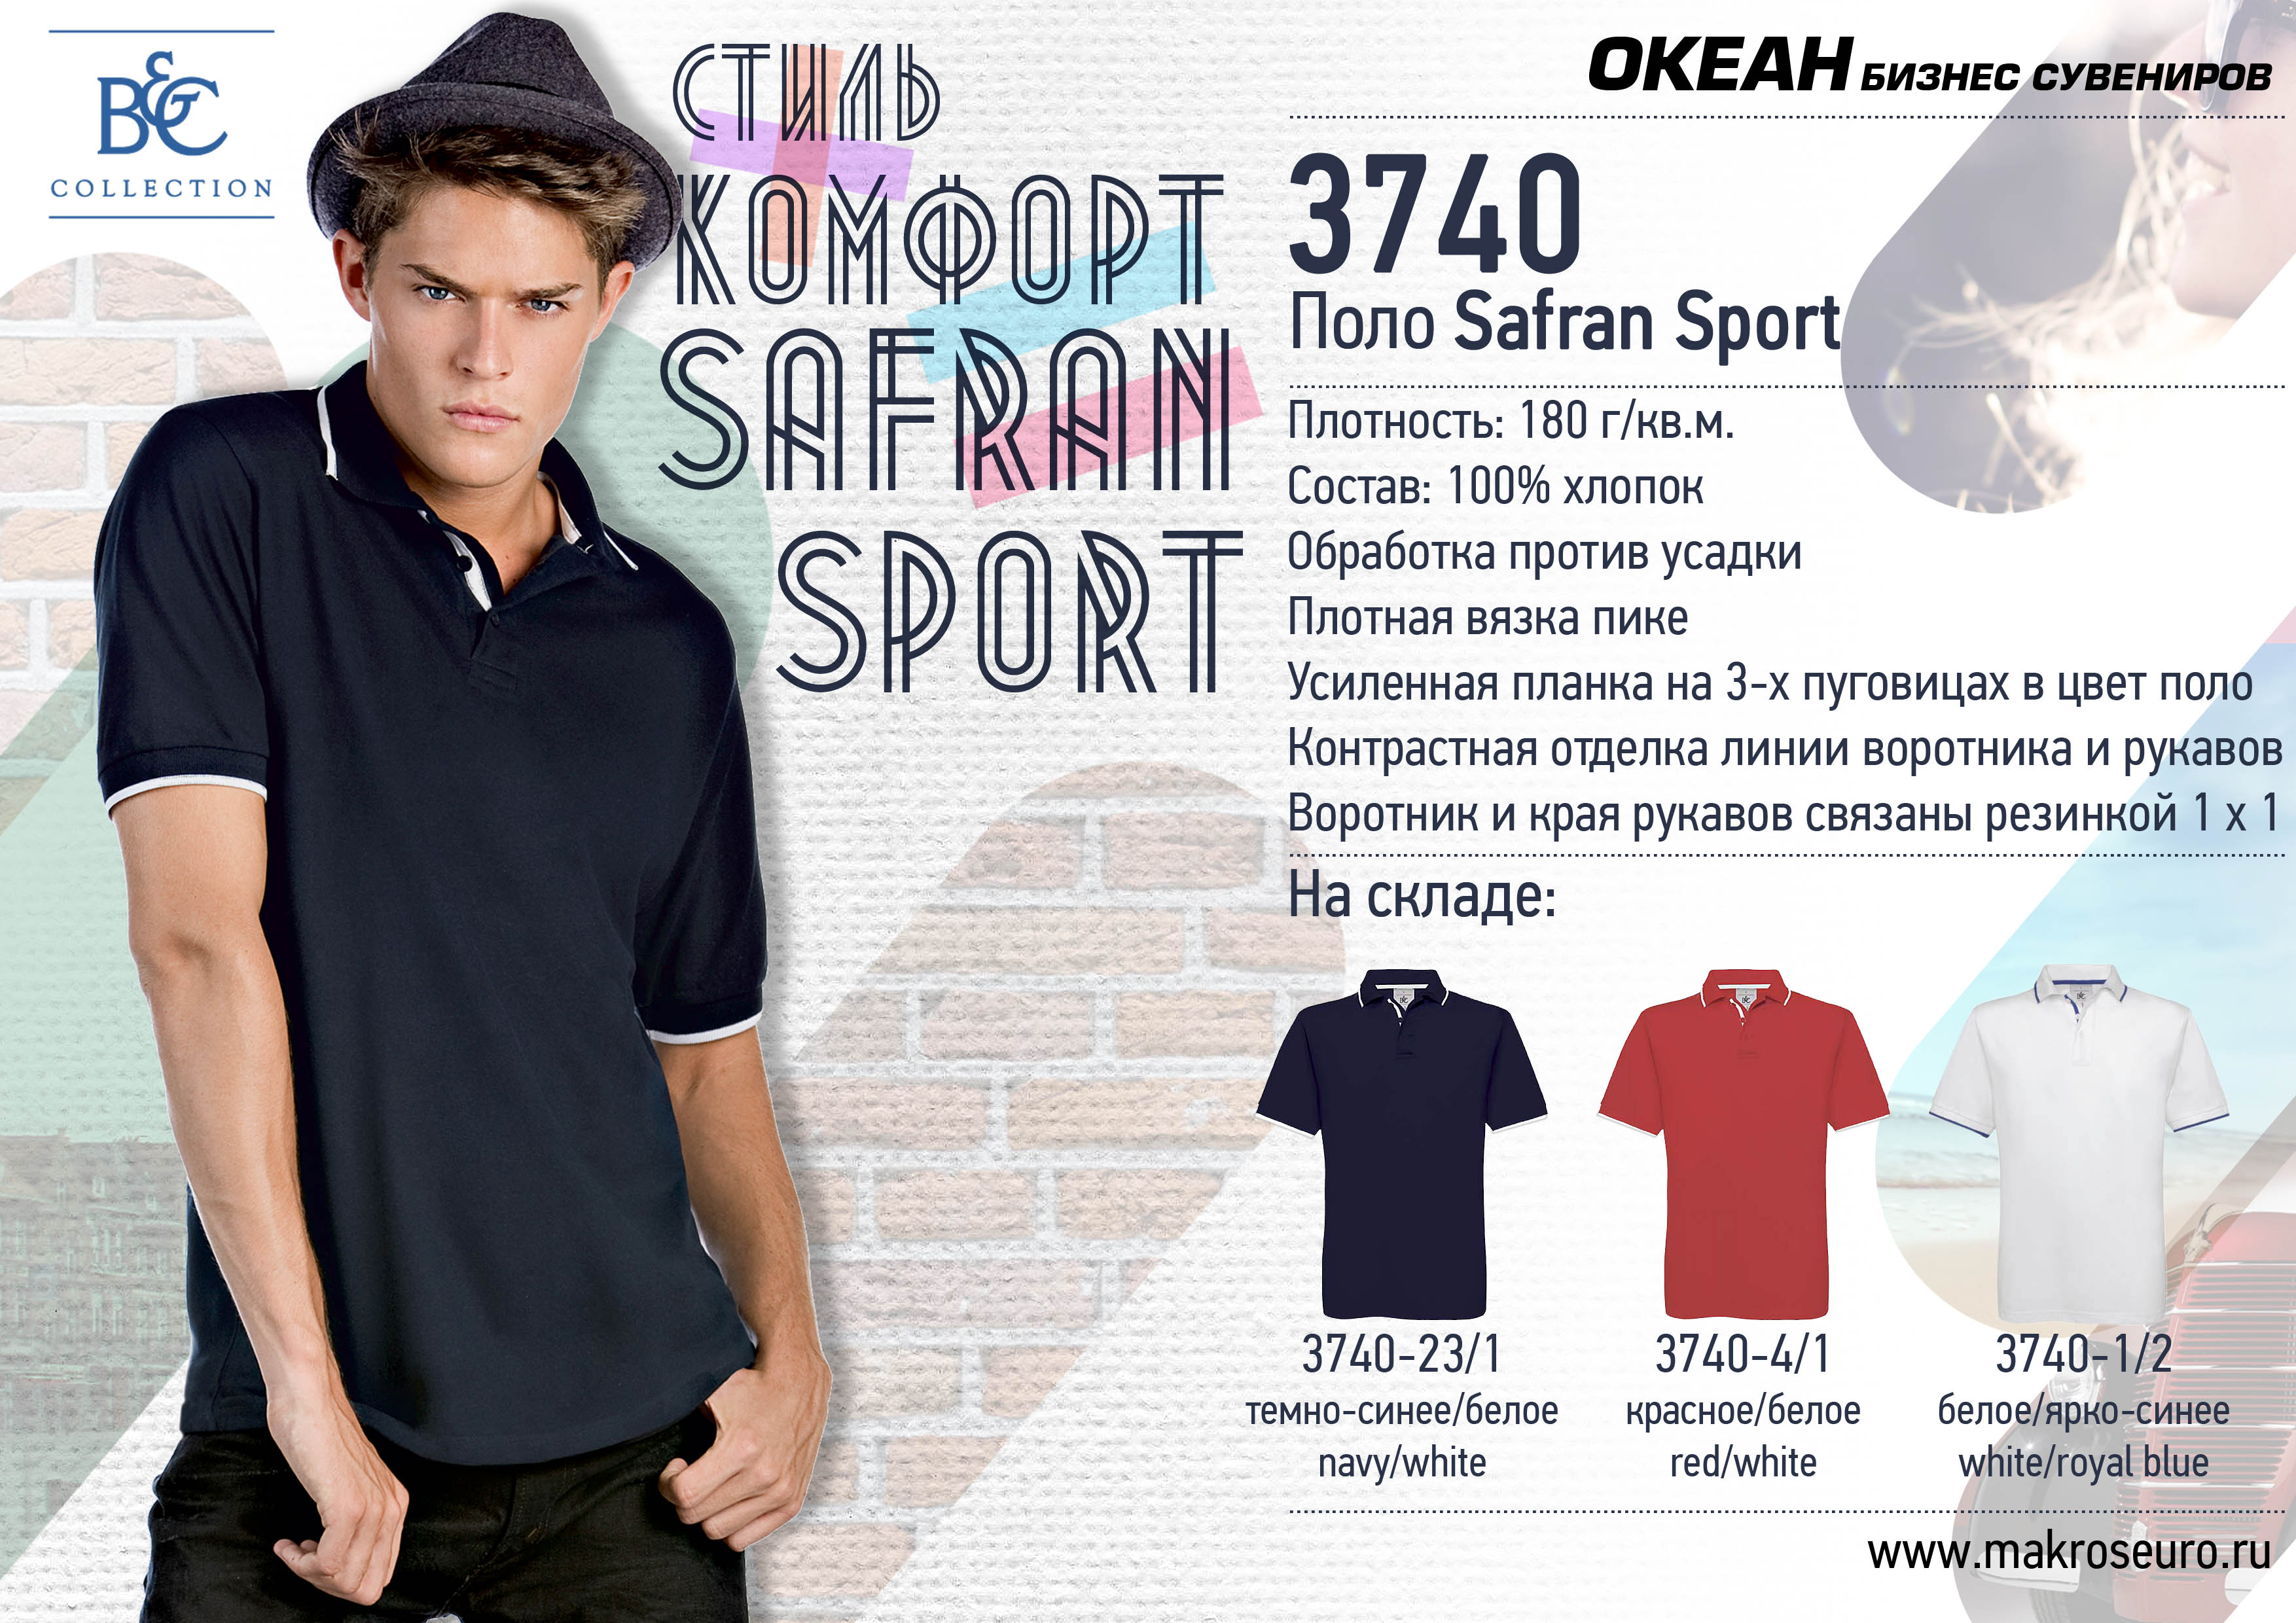 Поло Safran Sport, белое/ярко-синее/white/royal blue